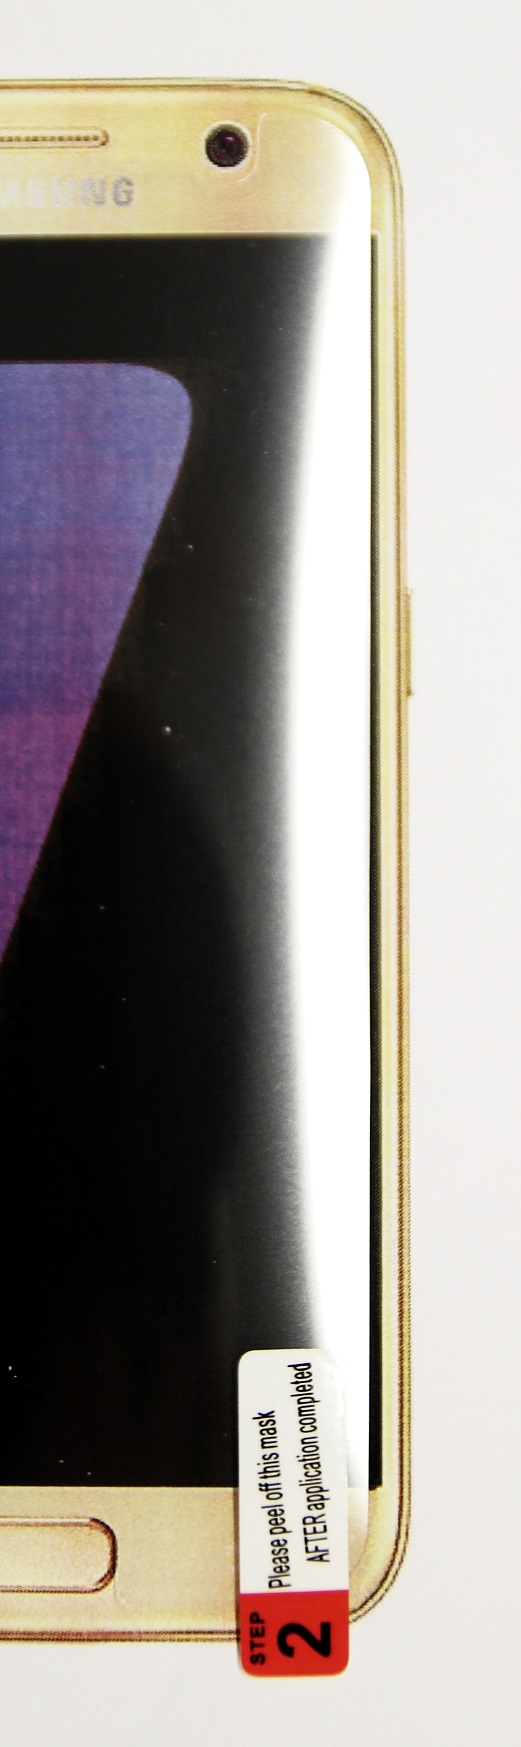 6-pakning Skjermbeskyttelse Samsung Galaxy S7 (G930F)